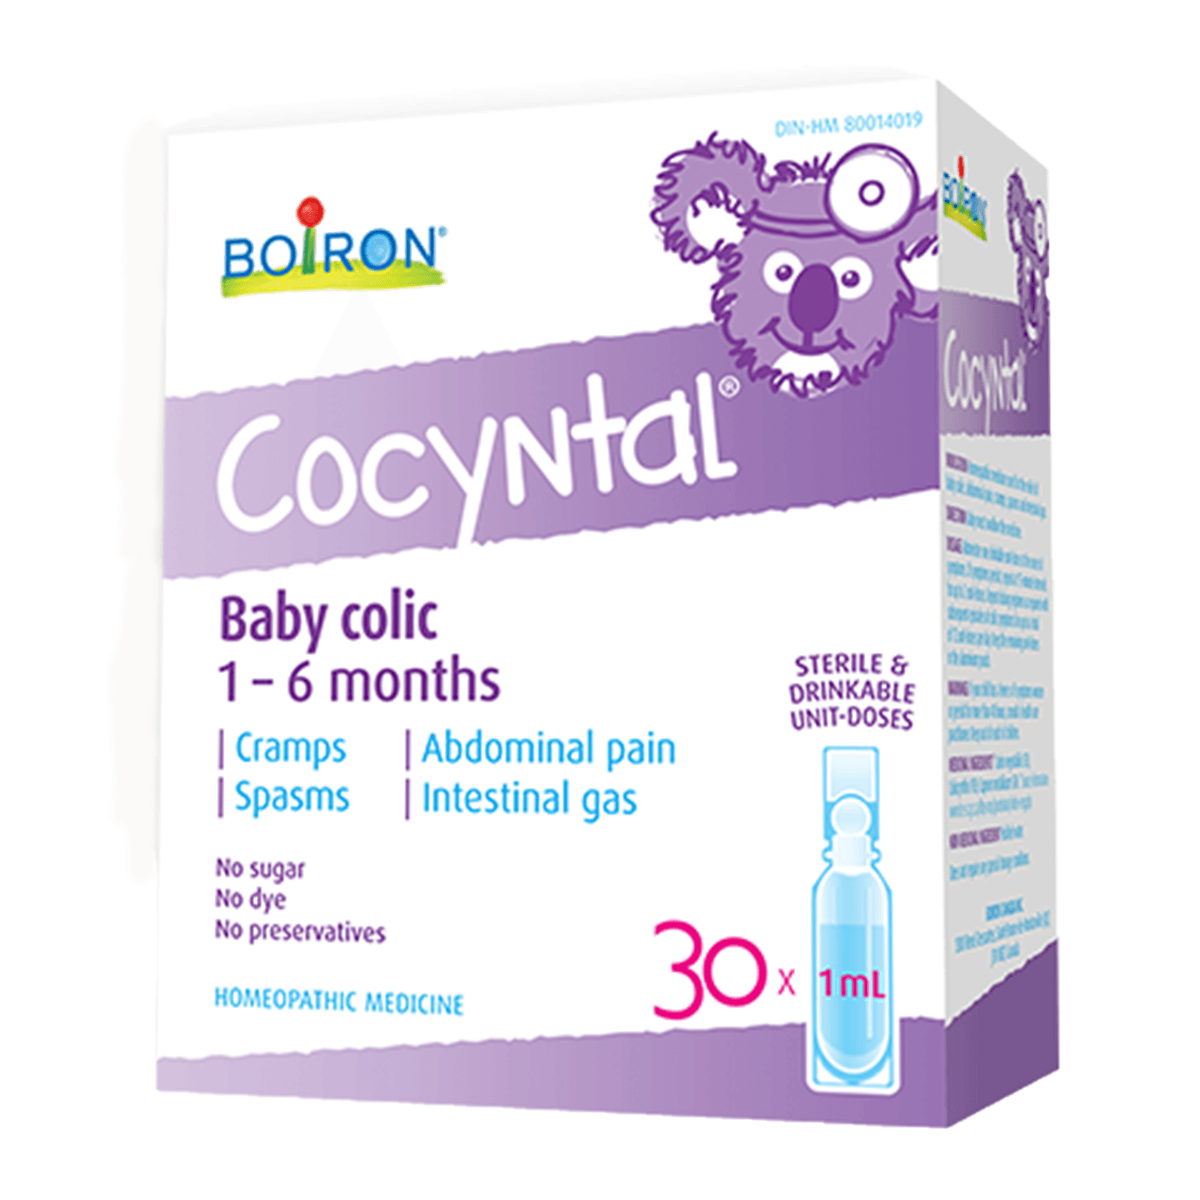 Boiron Cocyntal 30x1mL Homeopathic at Village Vitamin Store